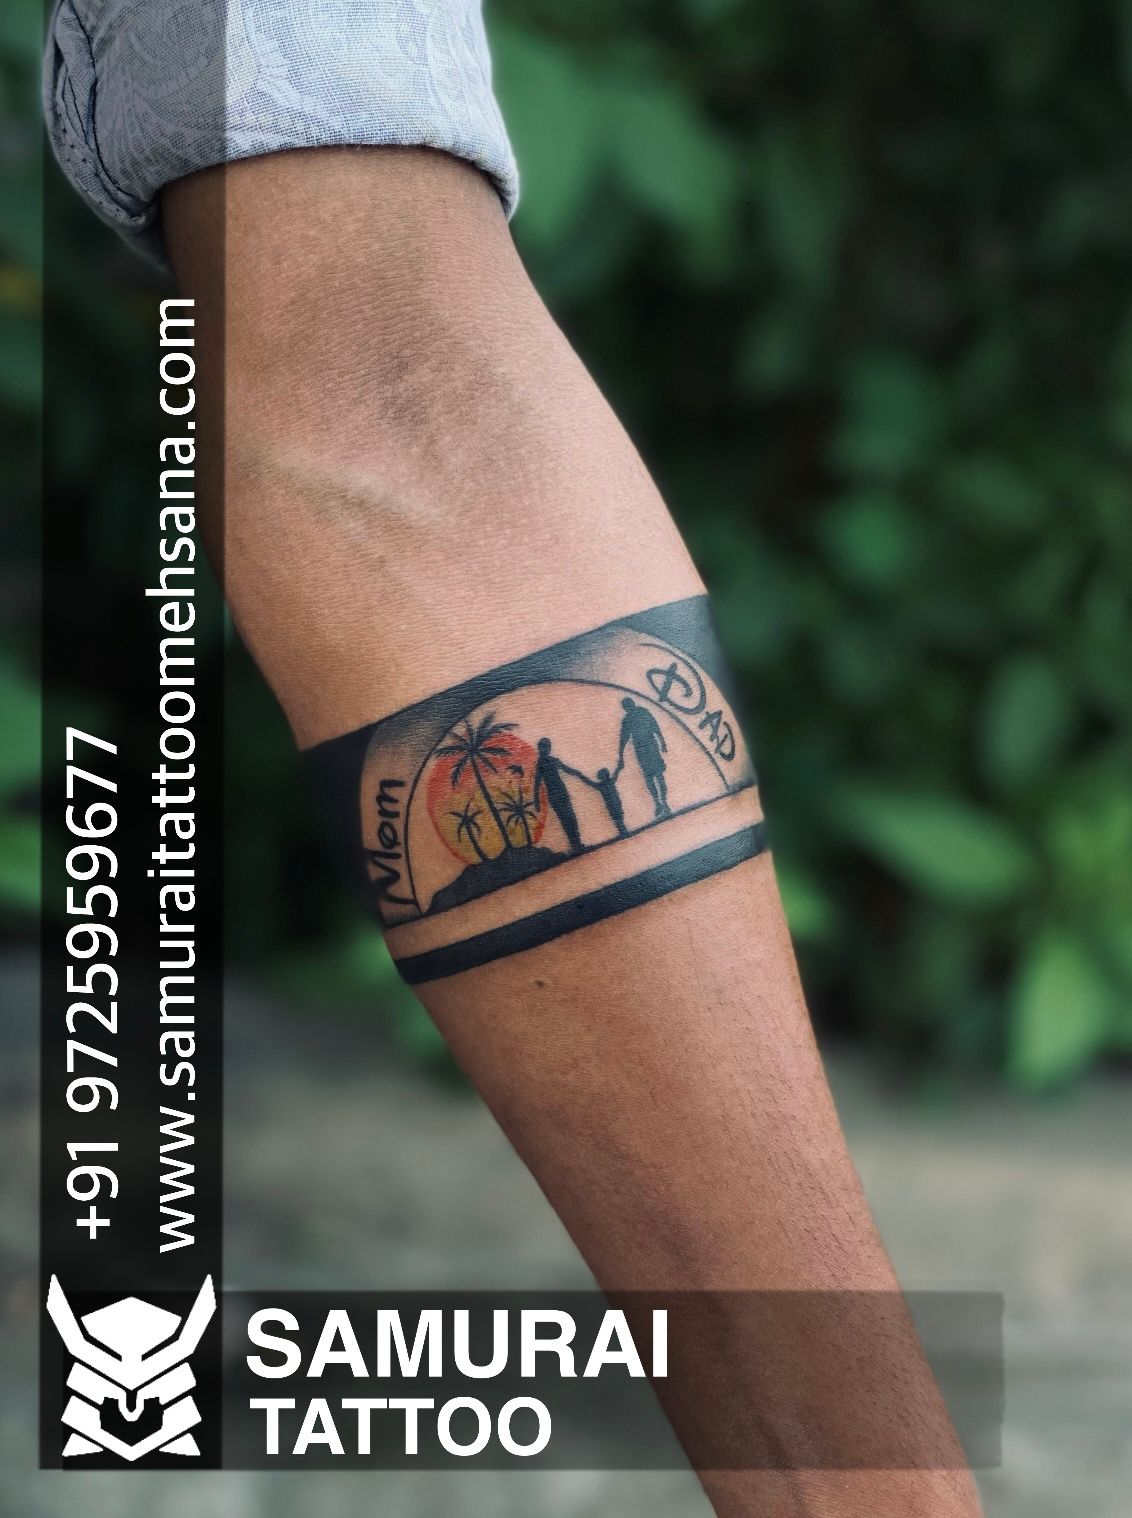 Band Tattoo Designs | Band Tattoo | Maori Armband Tattoo | Band tattoo  designs, Hand tattoos for guys, Forearm band tattoos